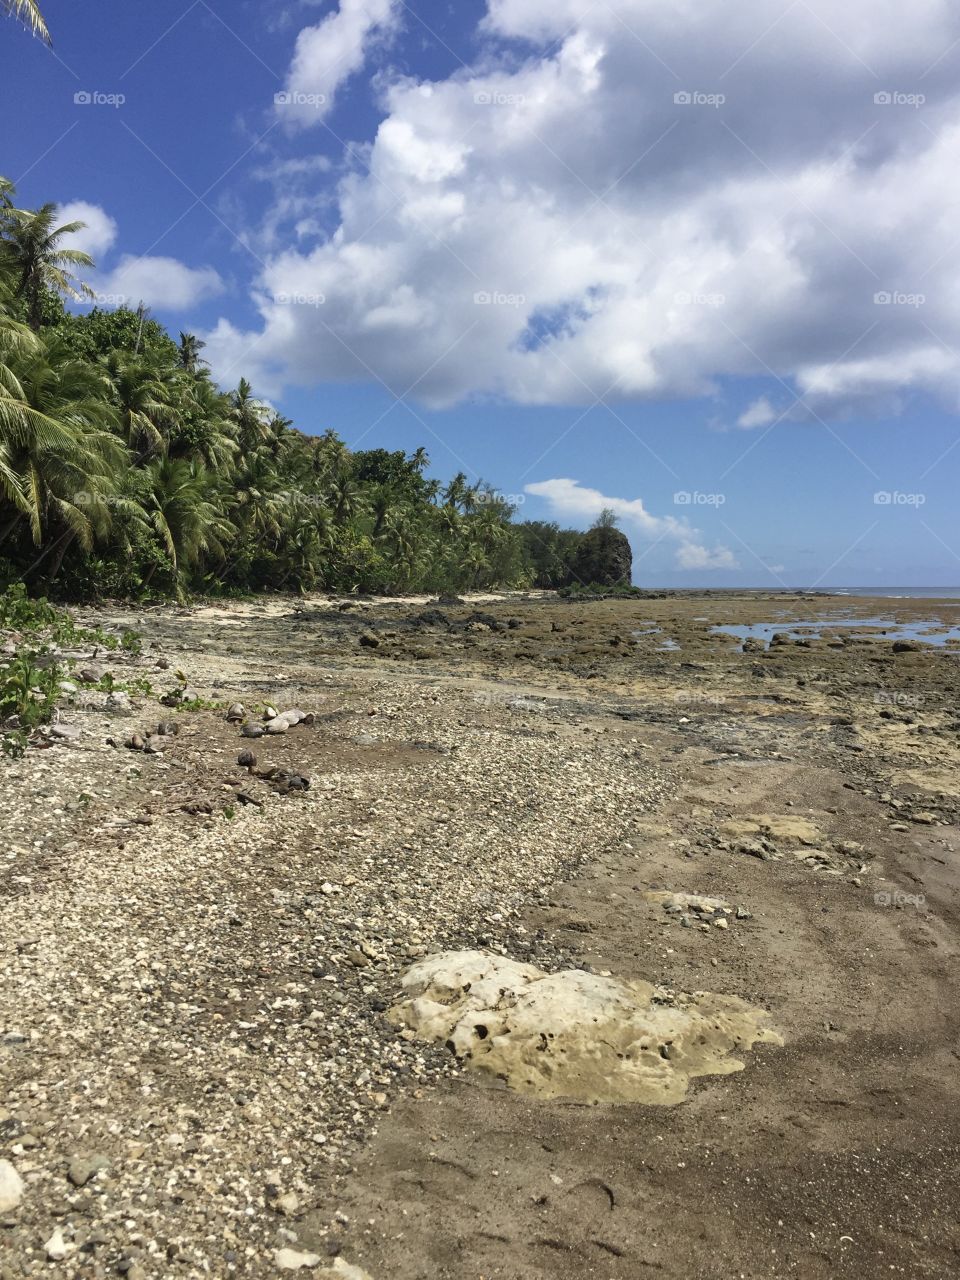 Guam shoreline